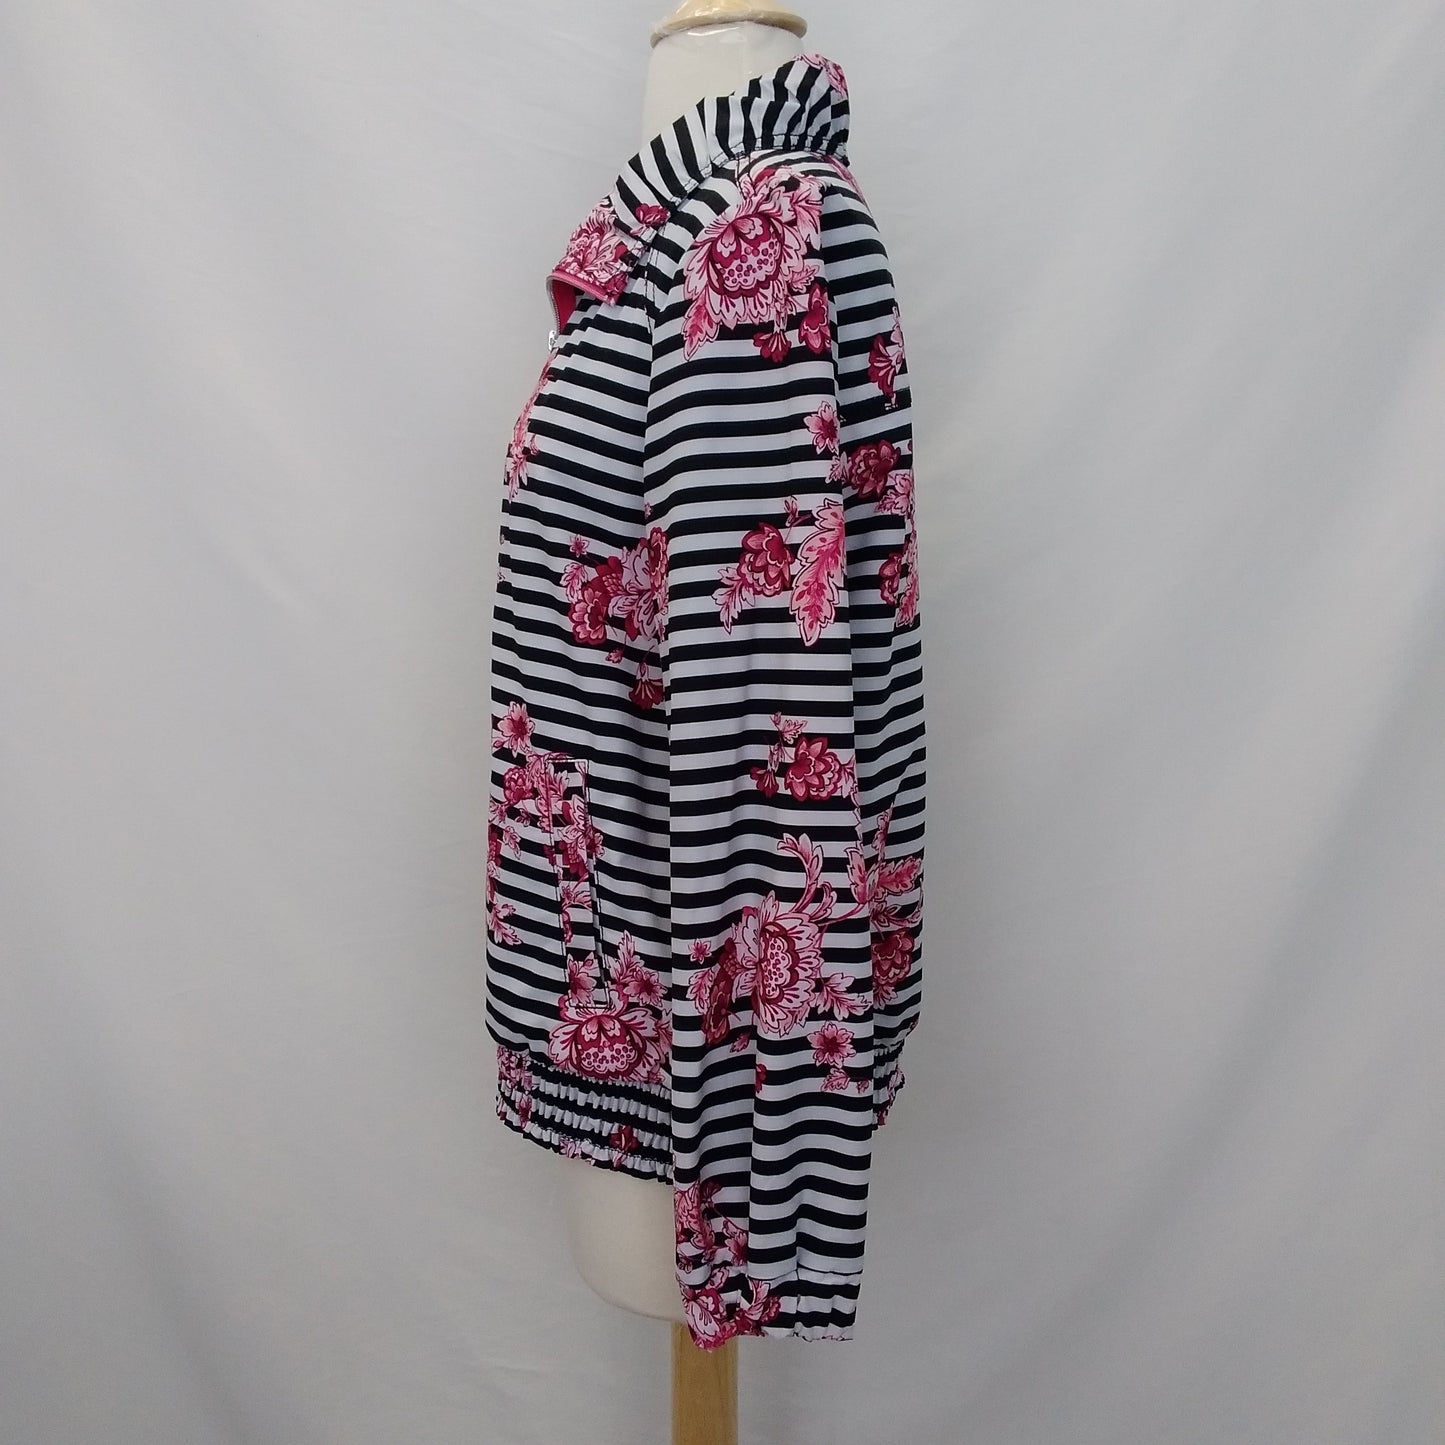 Chico’s Zenergy black Stripe pink Floral Neema Jacket - 1 | US 8/10 M